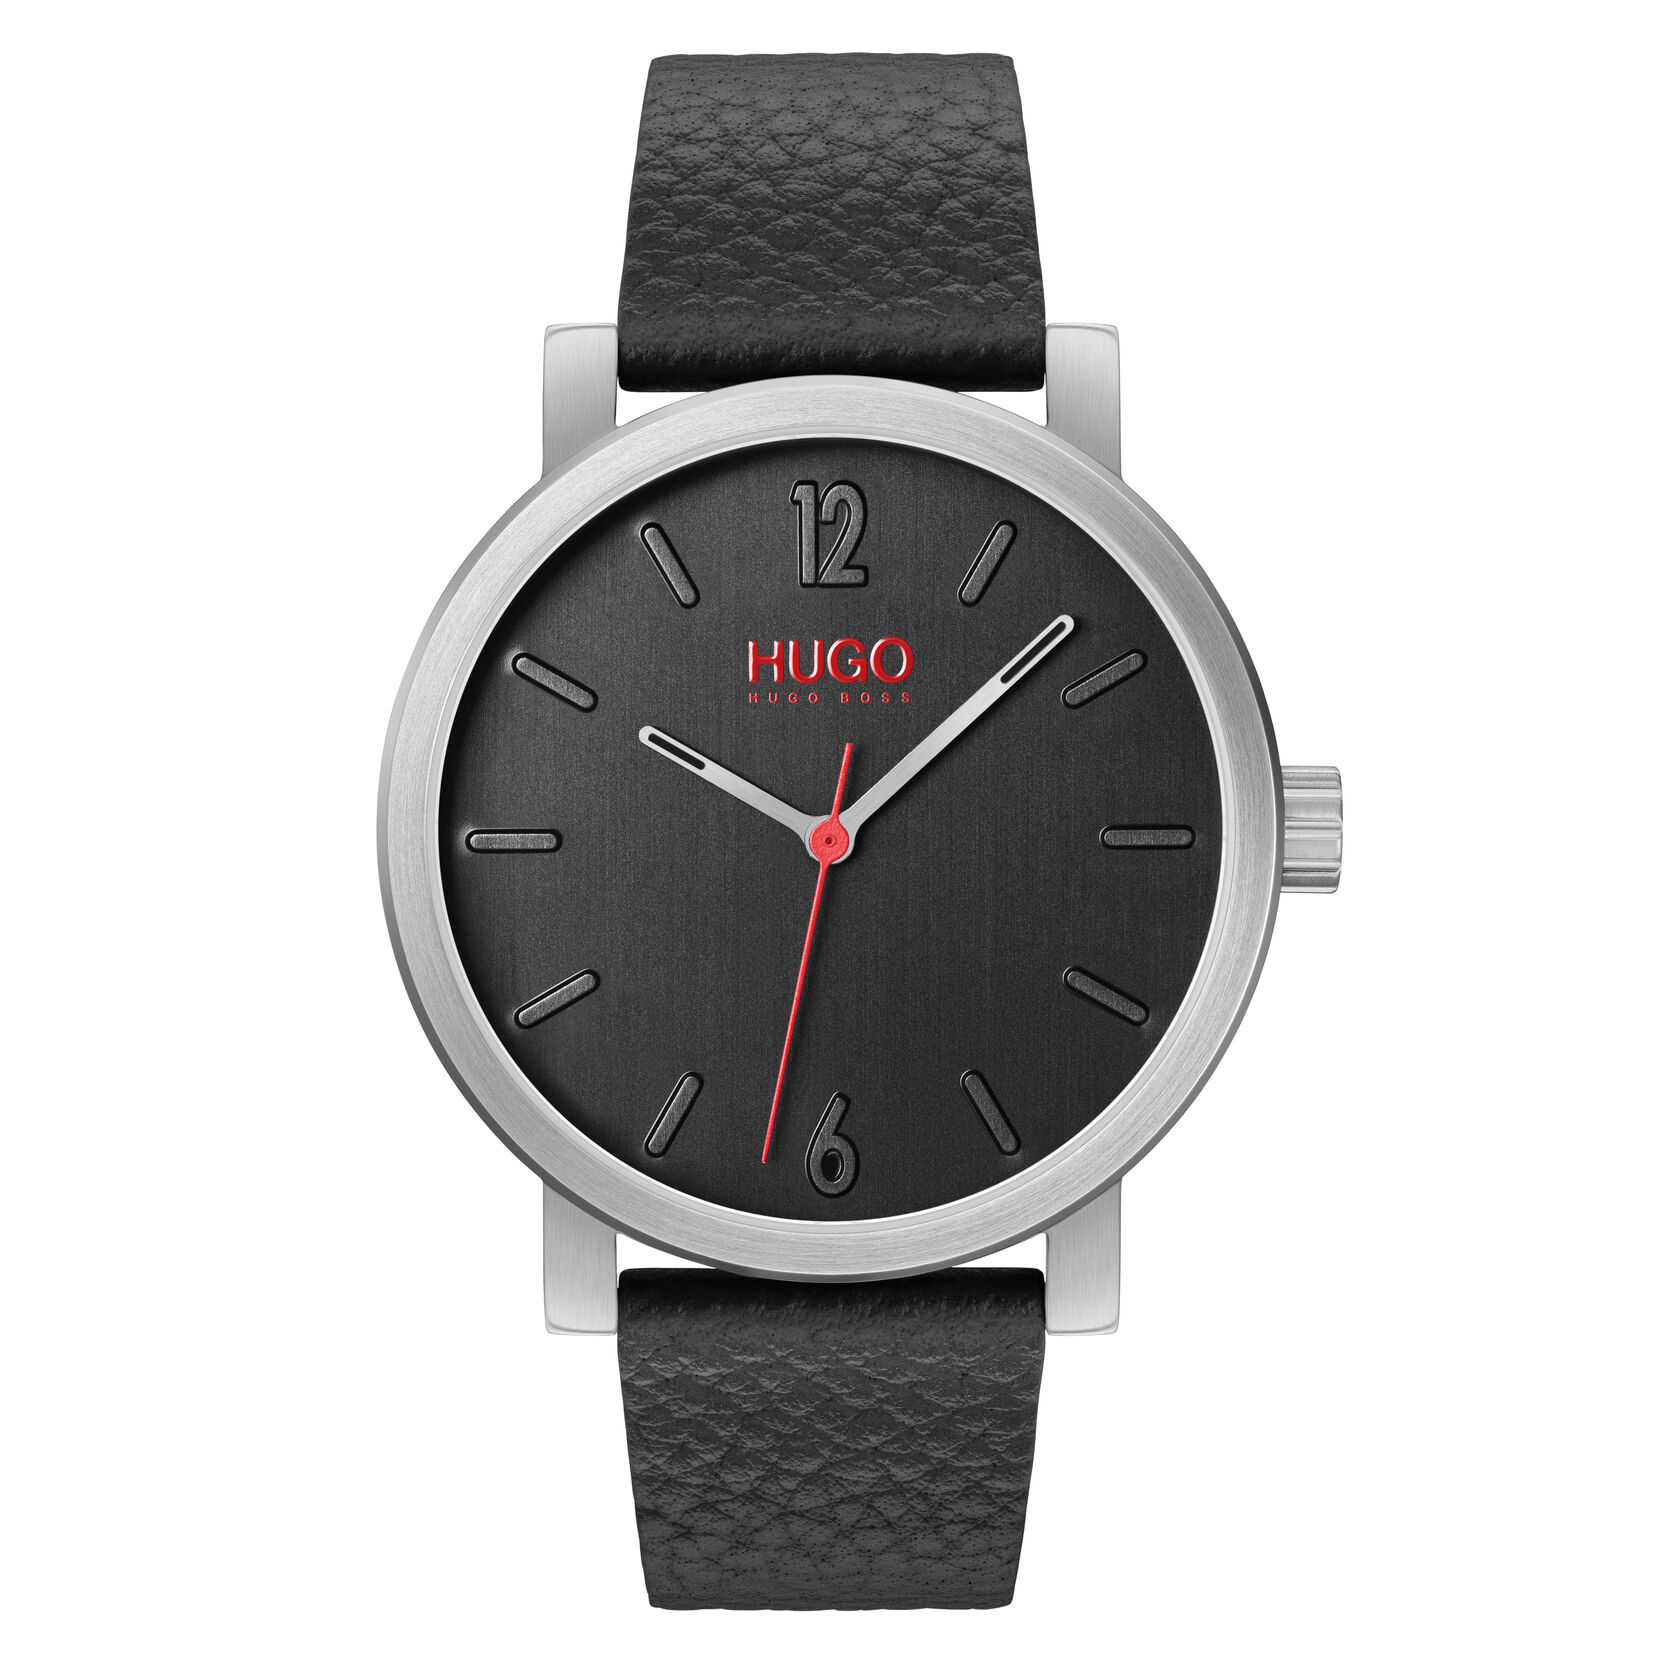 HUGO Men's #RASE Black Leather Watch